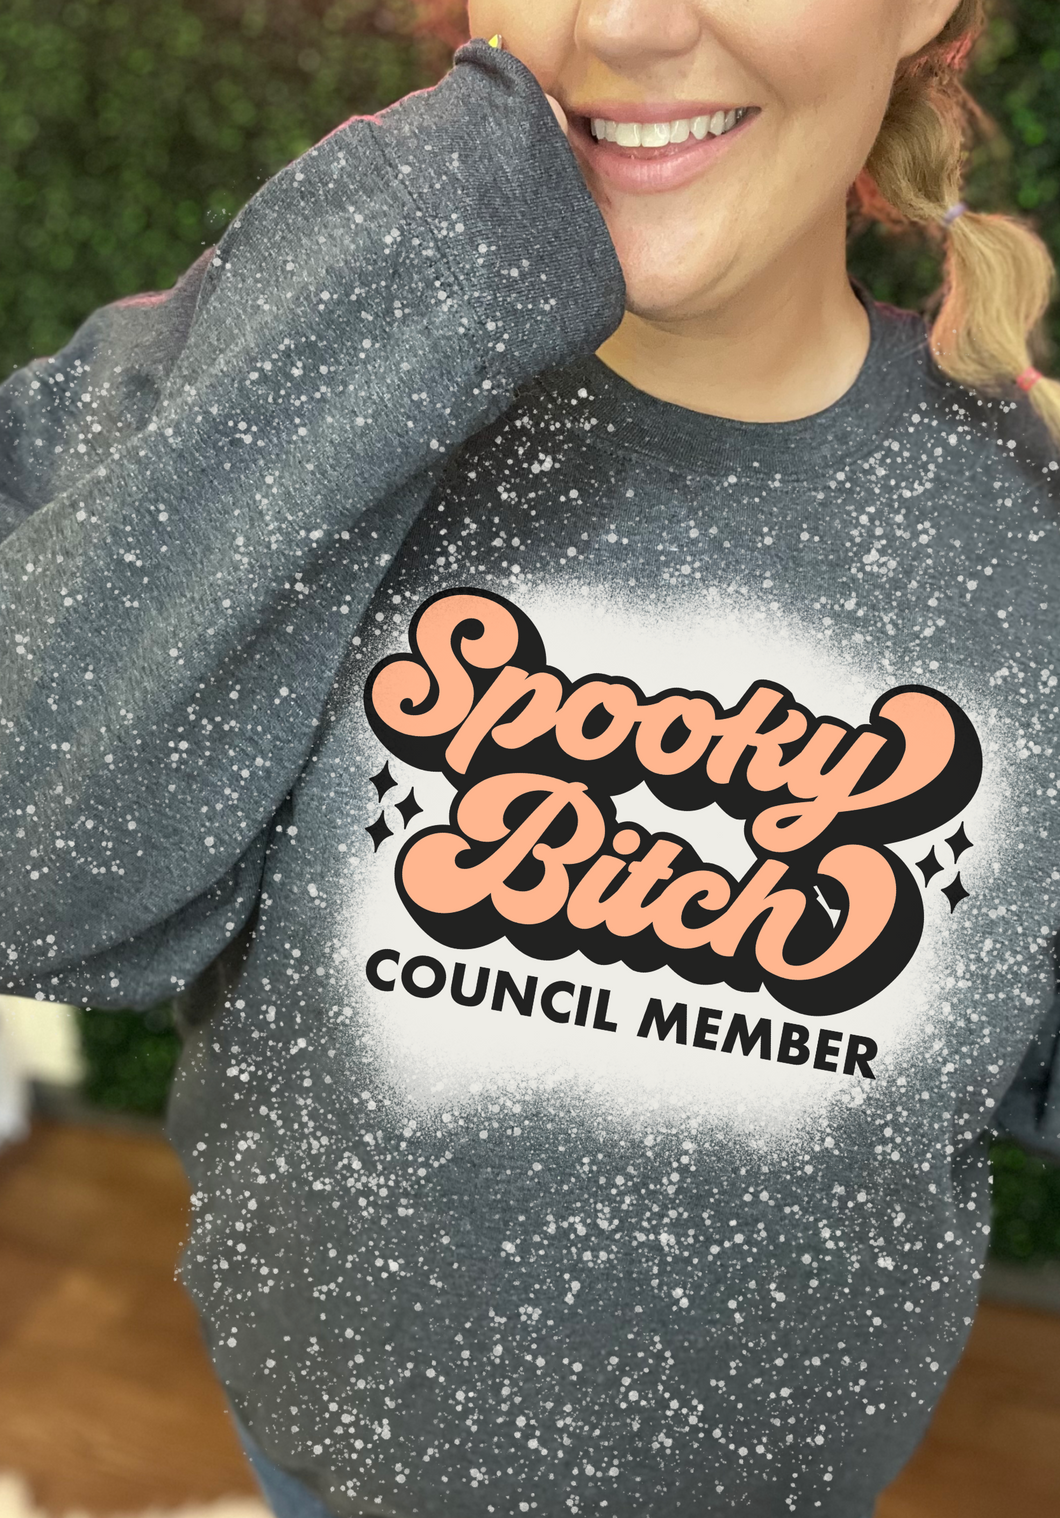 Spooky bitch council member